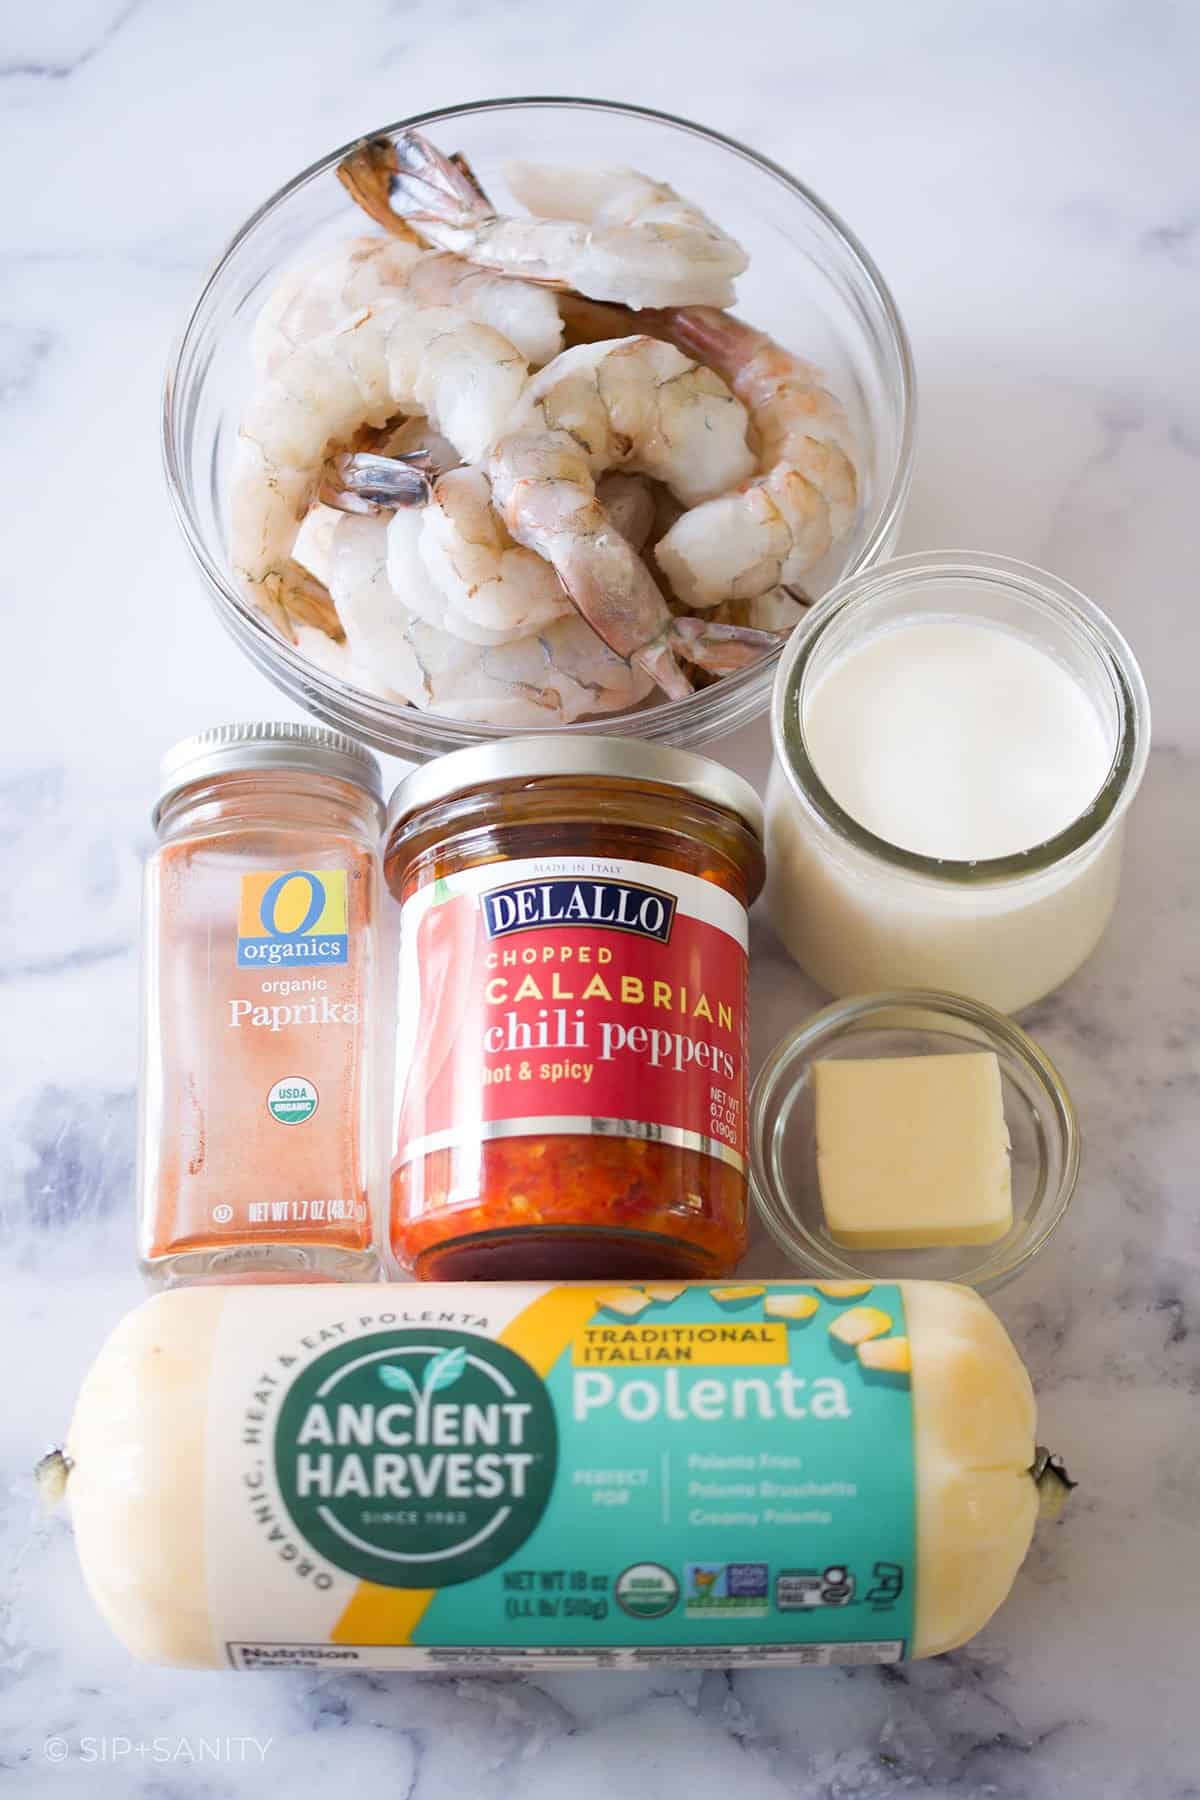 Ingredients to make grilled shrimp and polenta appetizers.